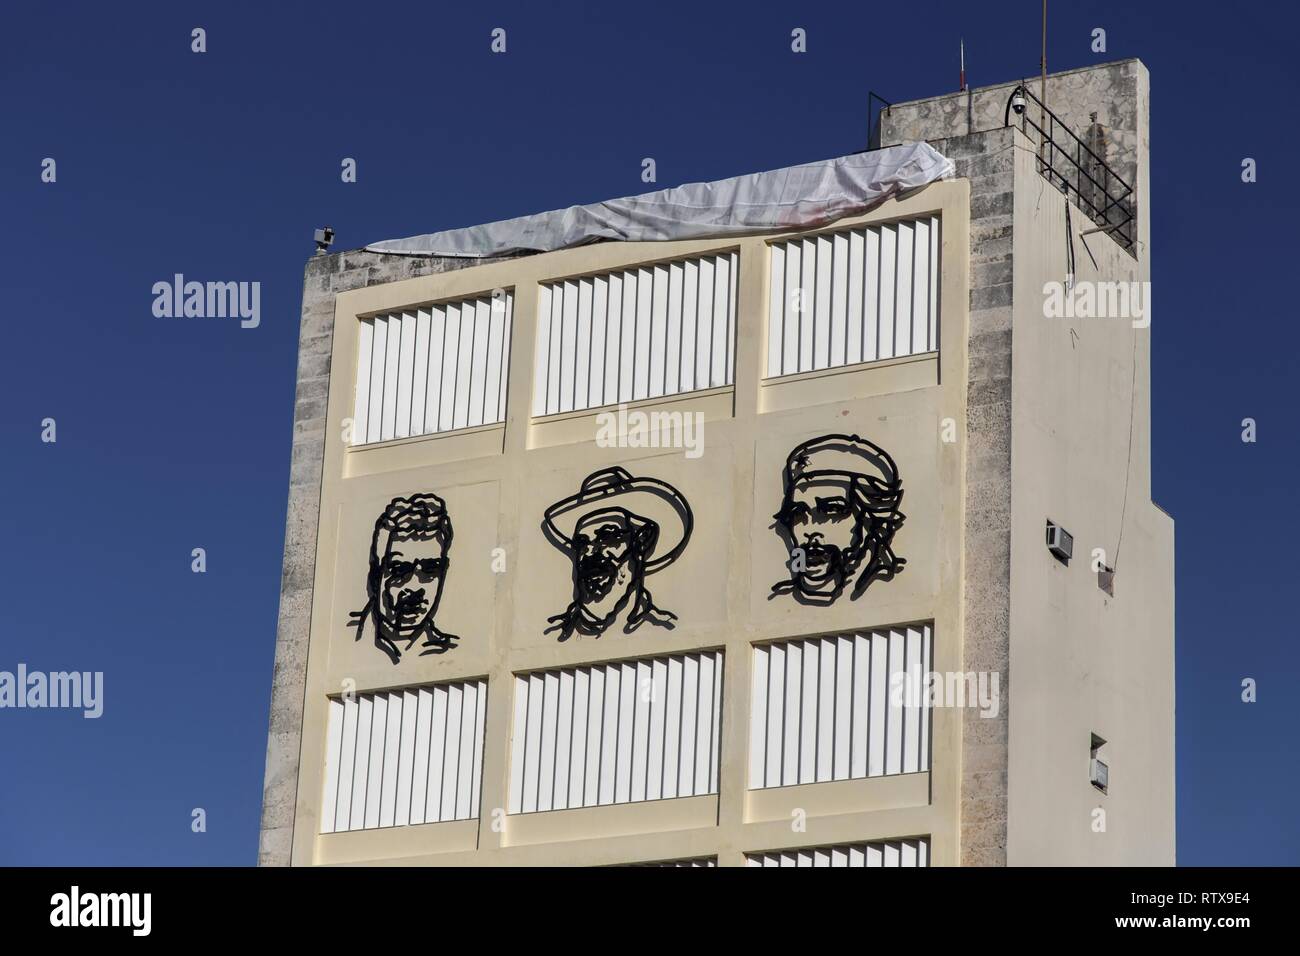 Metal Faces of Fidel Castro, Ernesto Che Guevara and Camilo Cienfuegos on Building Wall Mural near Revolution Museum in old Havana, Cuba Stock Photo